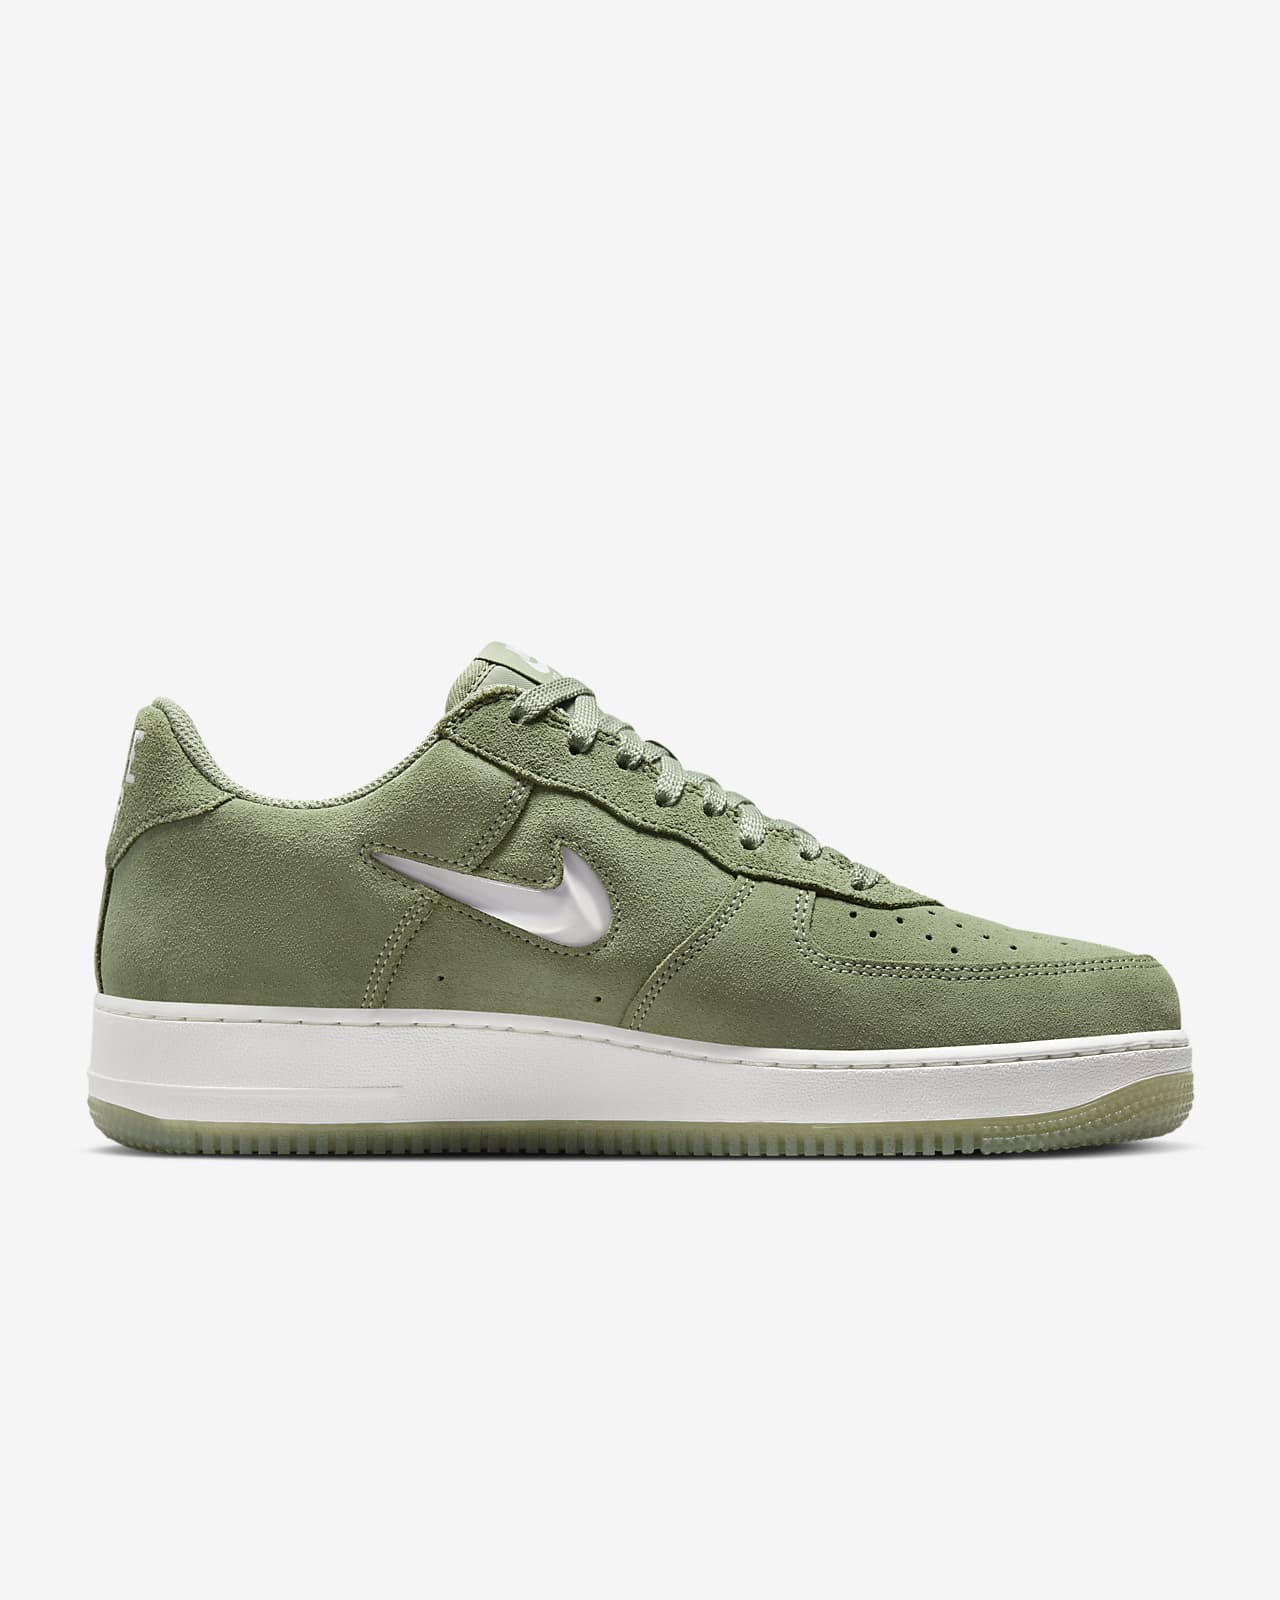 Nike Air force 1 07 LV8 white green Size 11 Men's